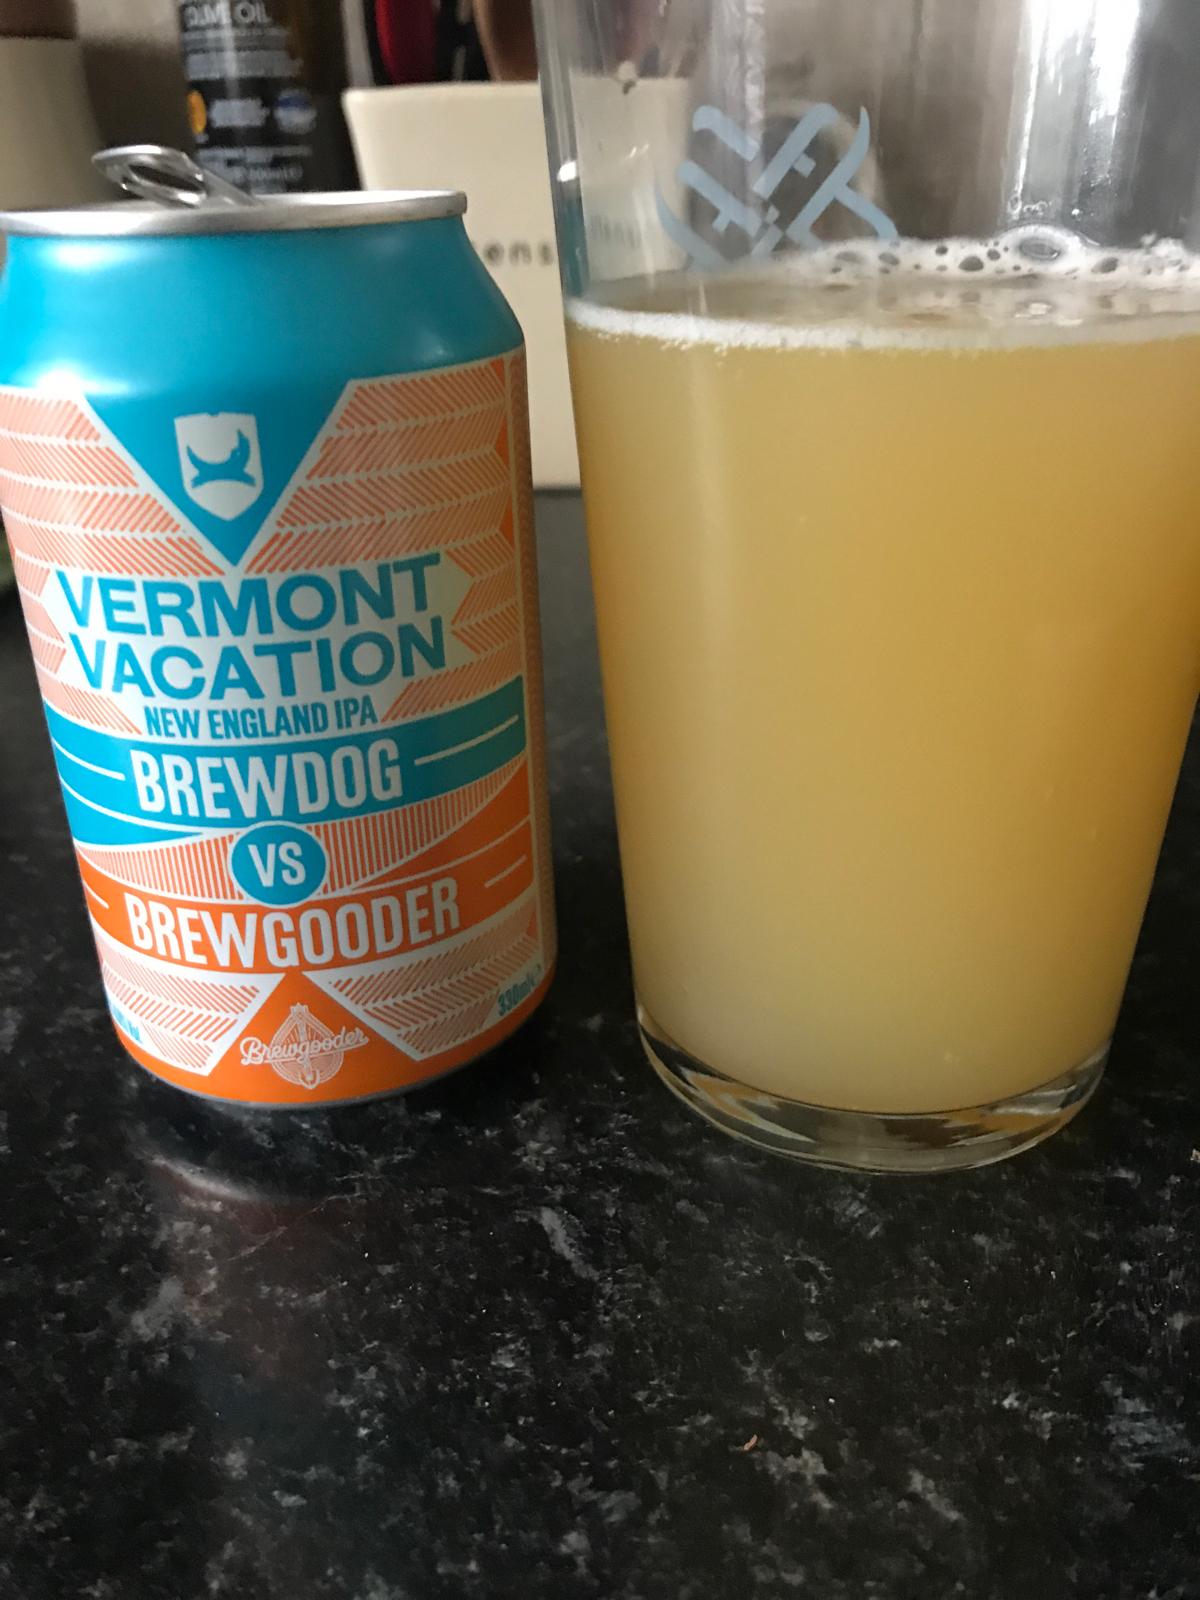 Vermont Vacation (Brewdog vs Brewgooder)